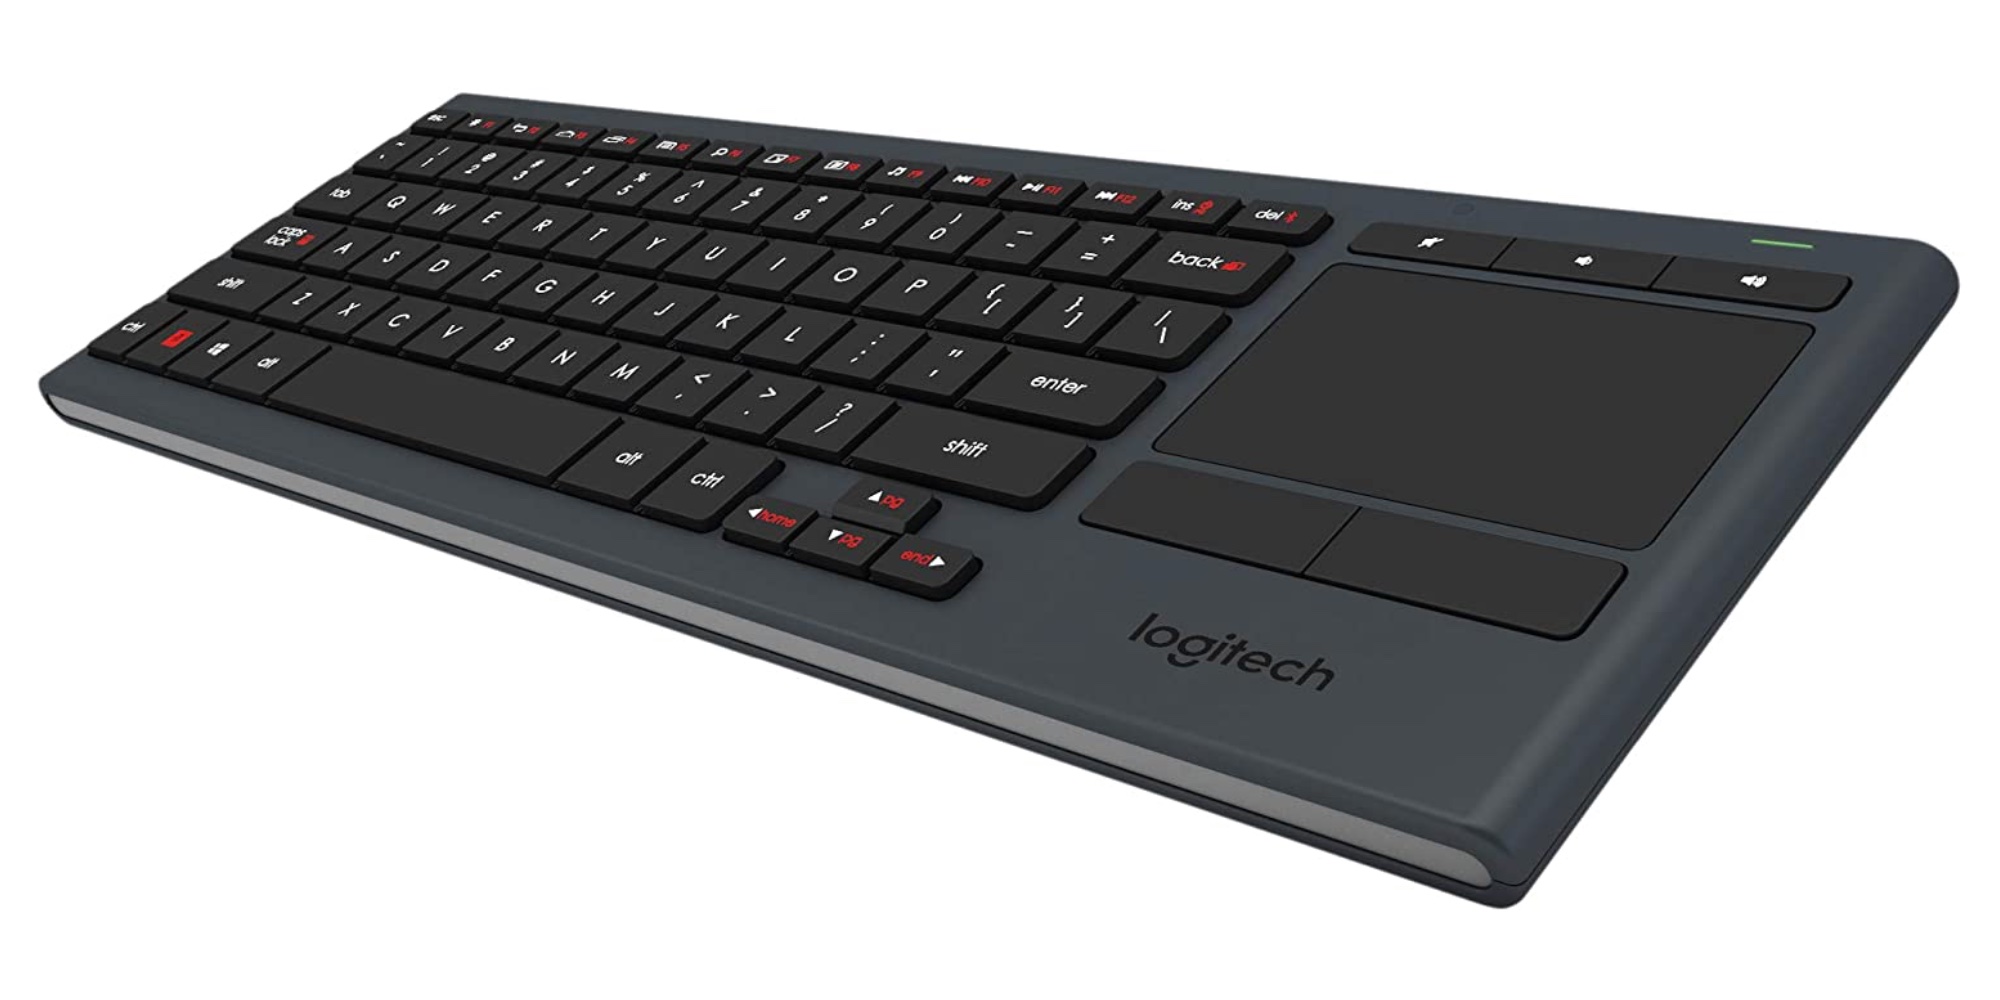 Logitech K830 Illuminated Keyboard 